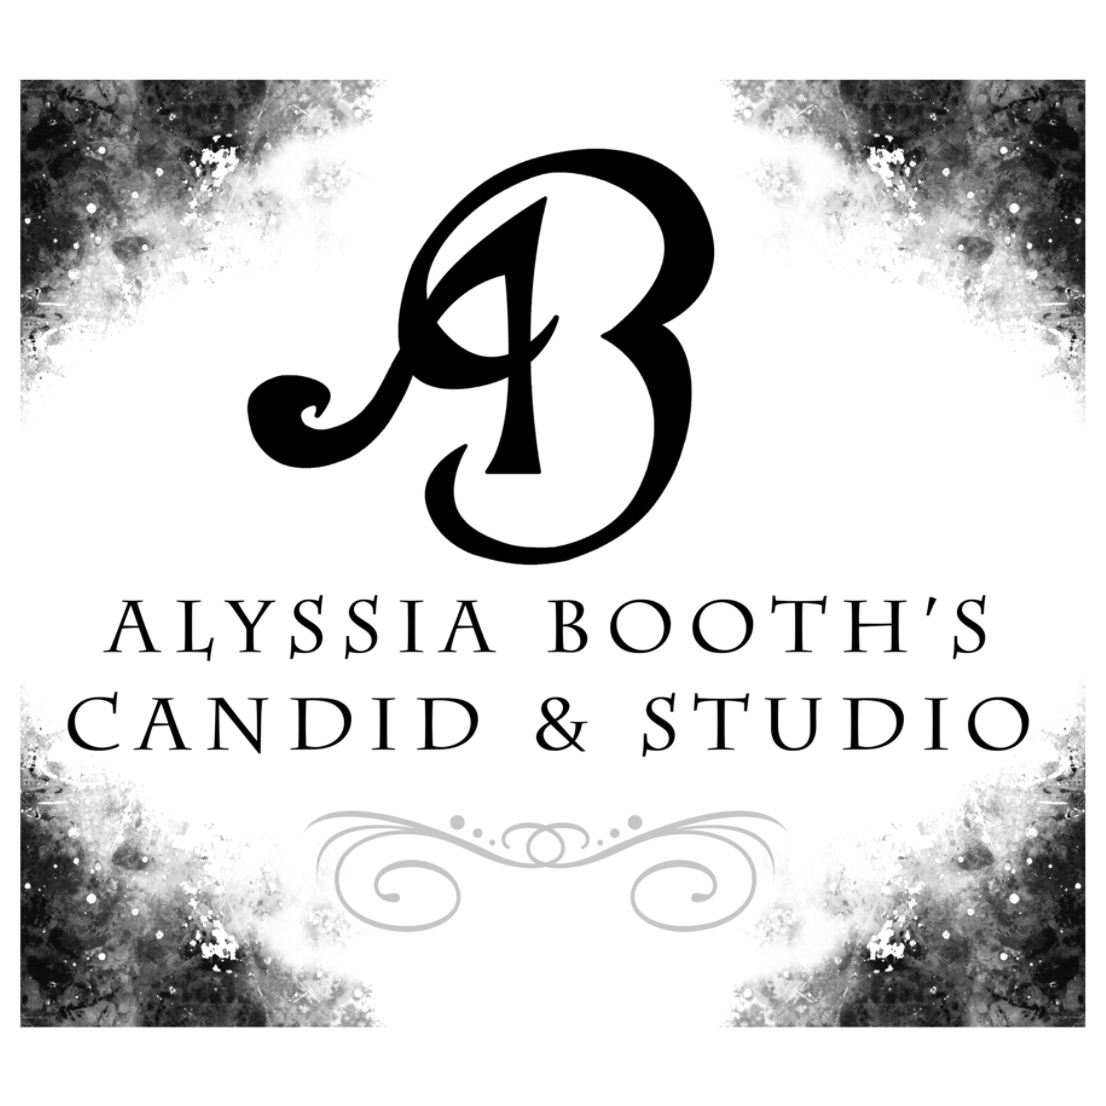 Alyssia Booth's Candid & Studio